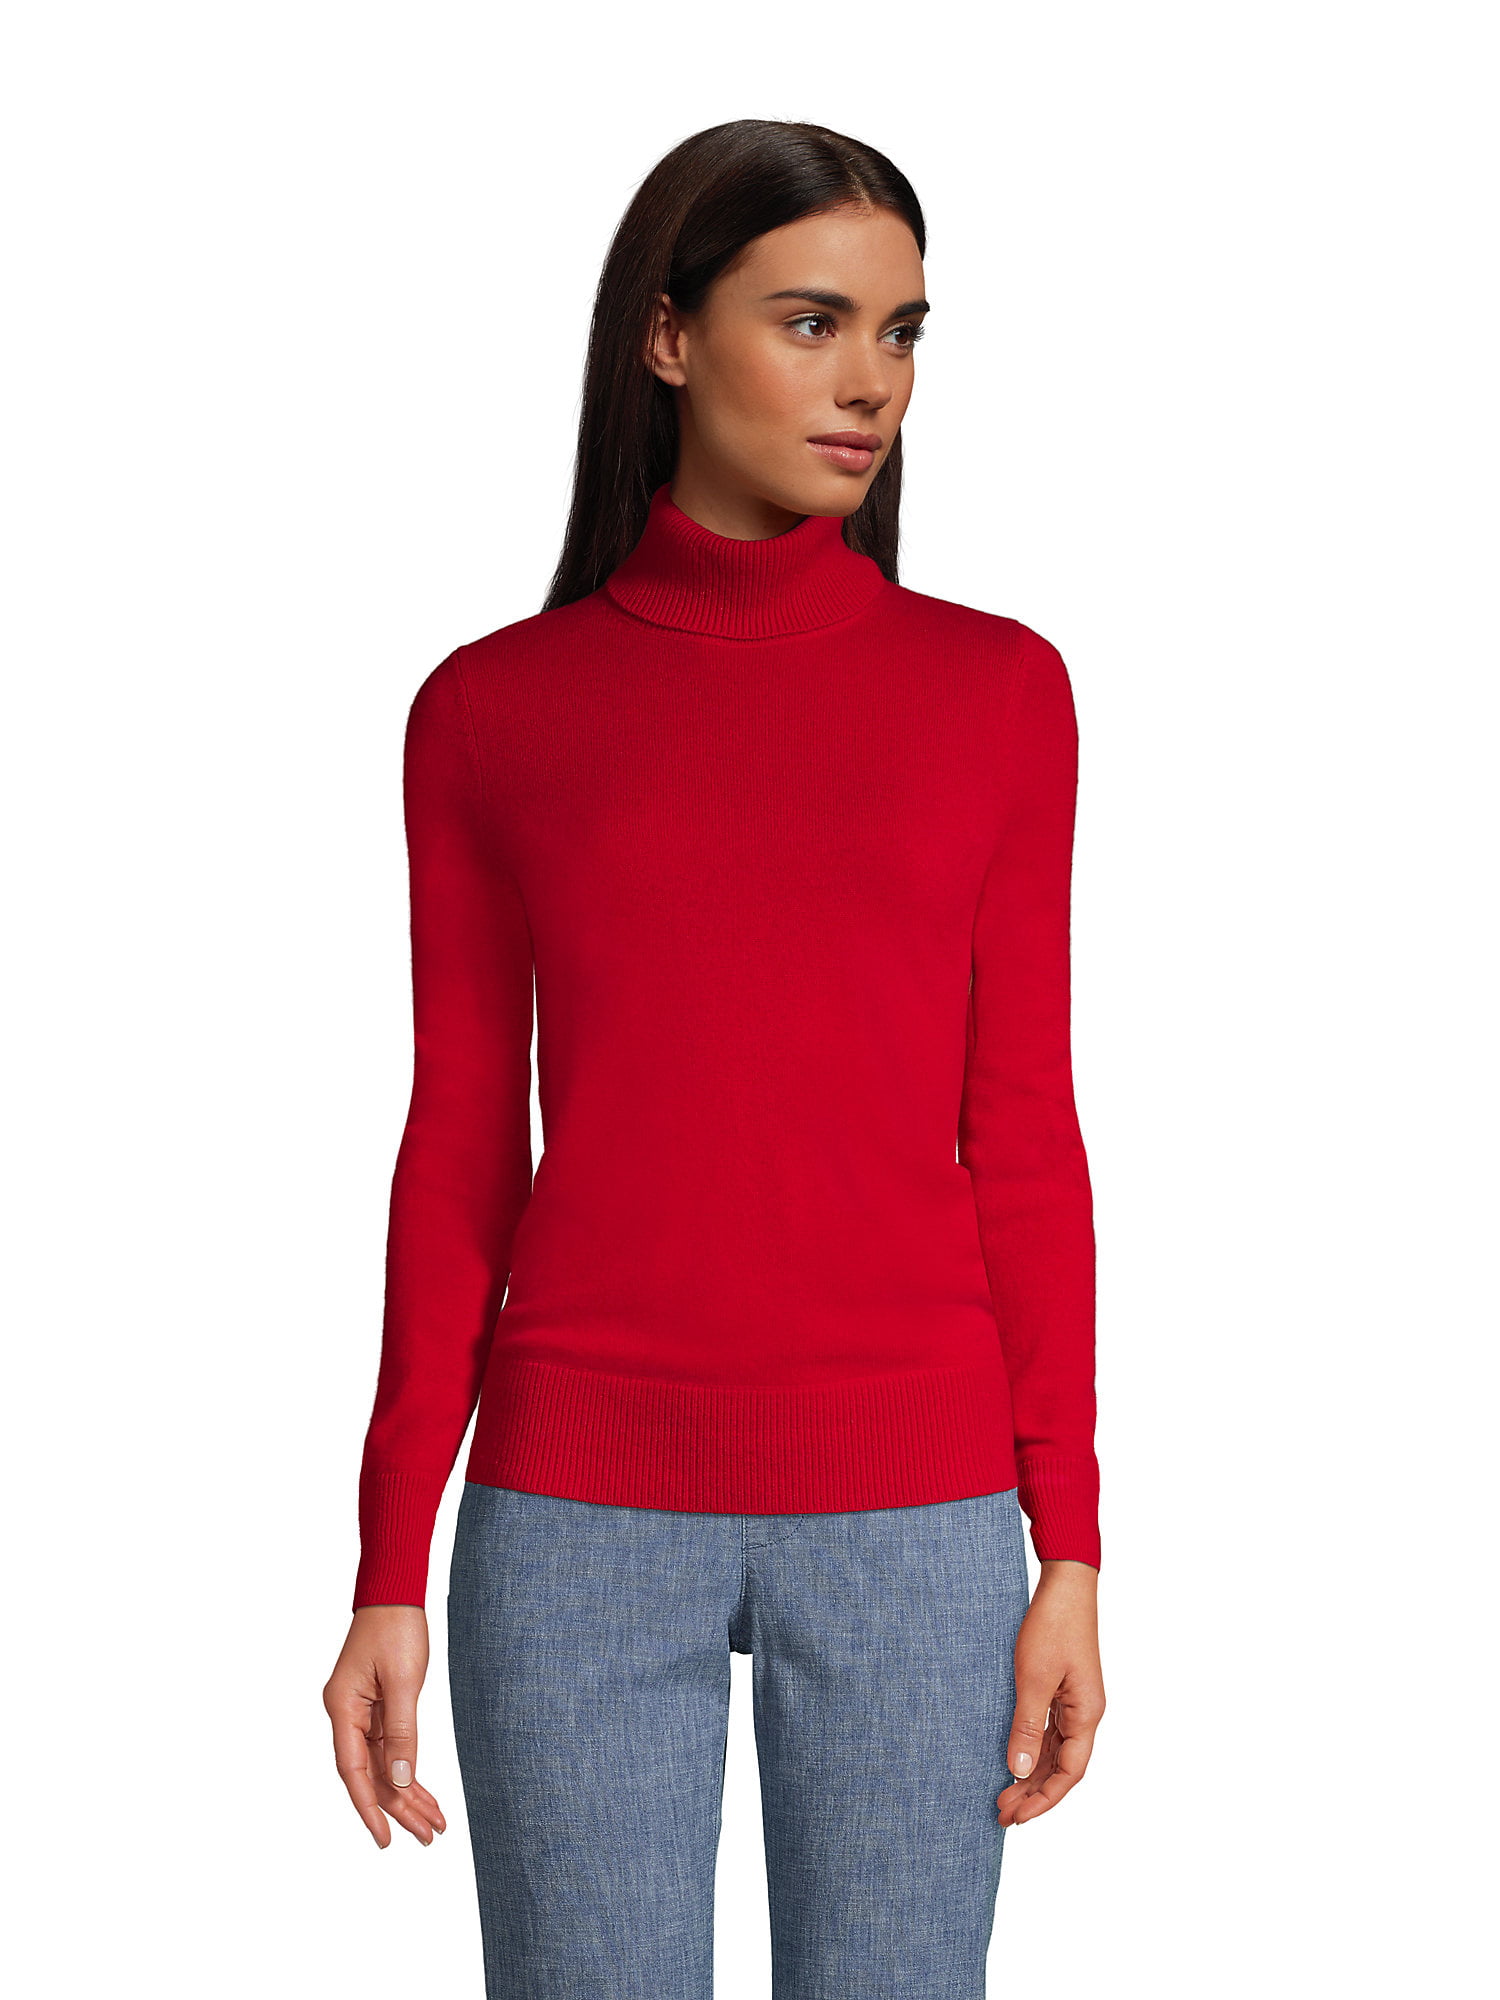 Lands' End Women's Cashmere Turtleneck Sweater 